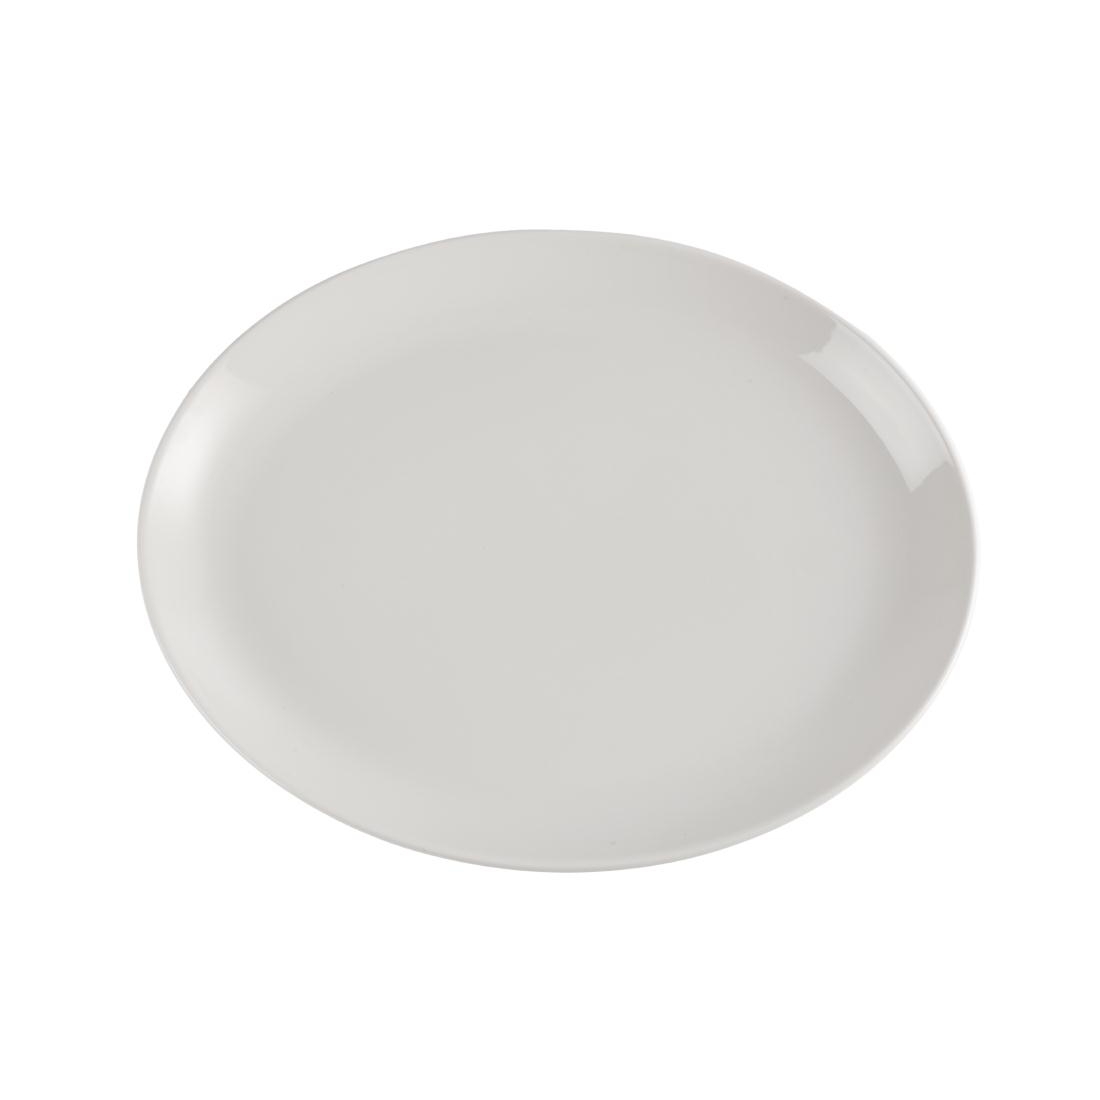 Churchill Plain Whiteware Oval Plates 340mm